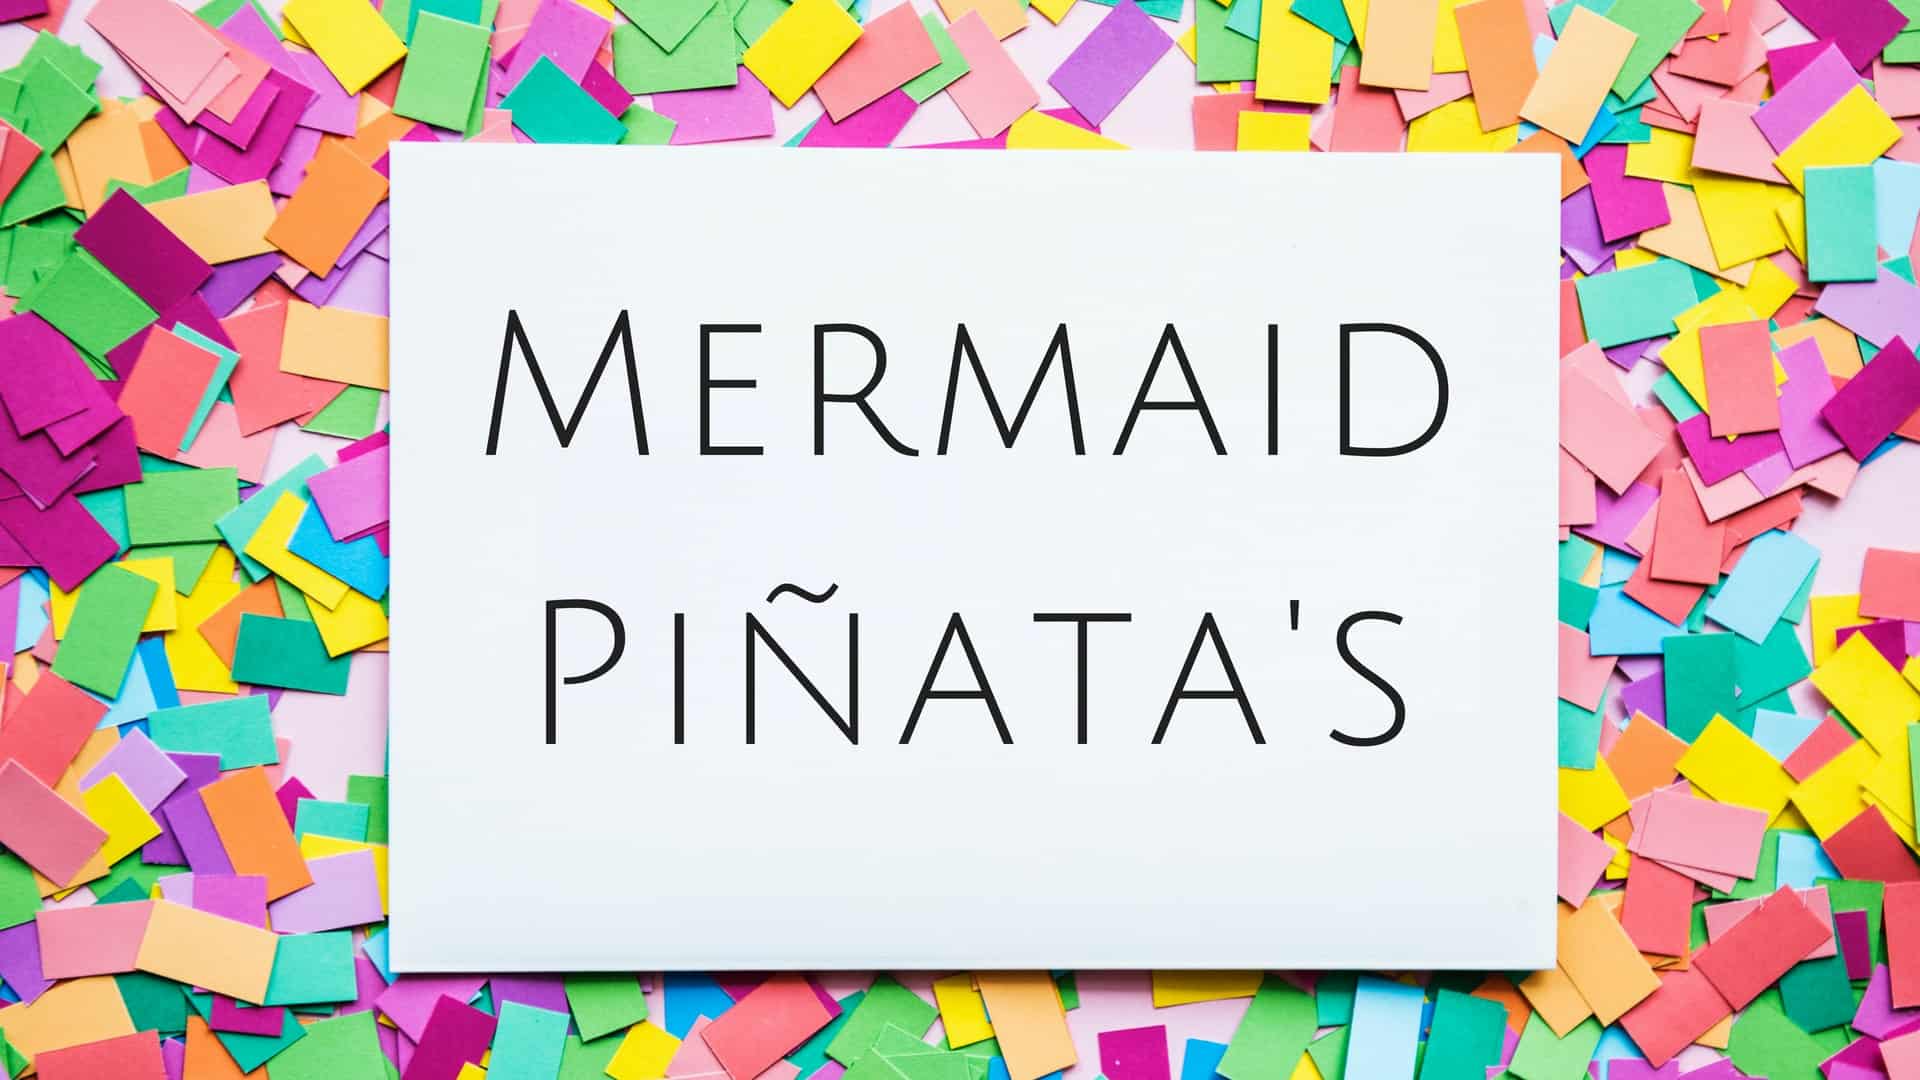 Pull String Fish Pinata for Girls, Ocean and Mermaid Theme